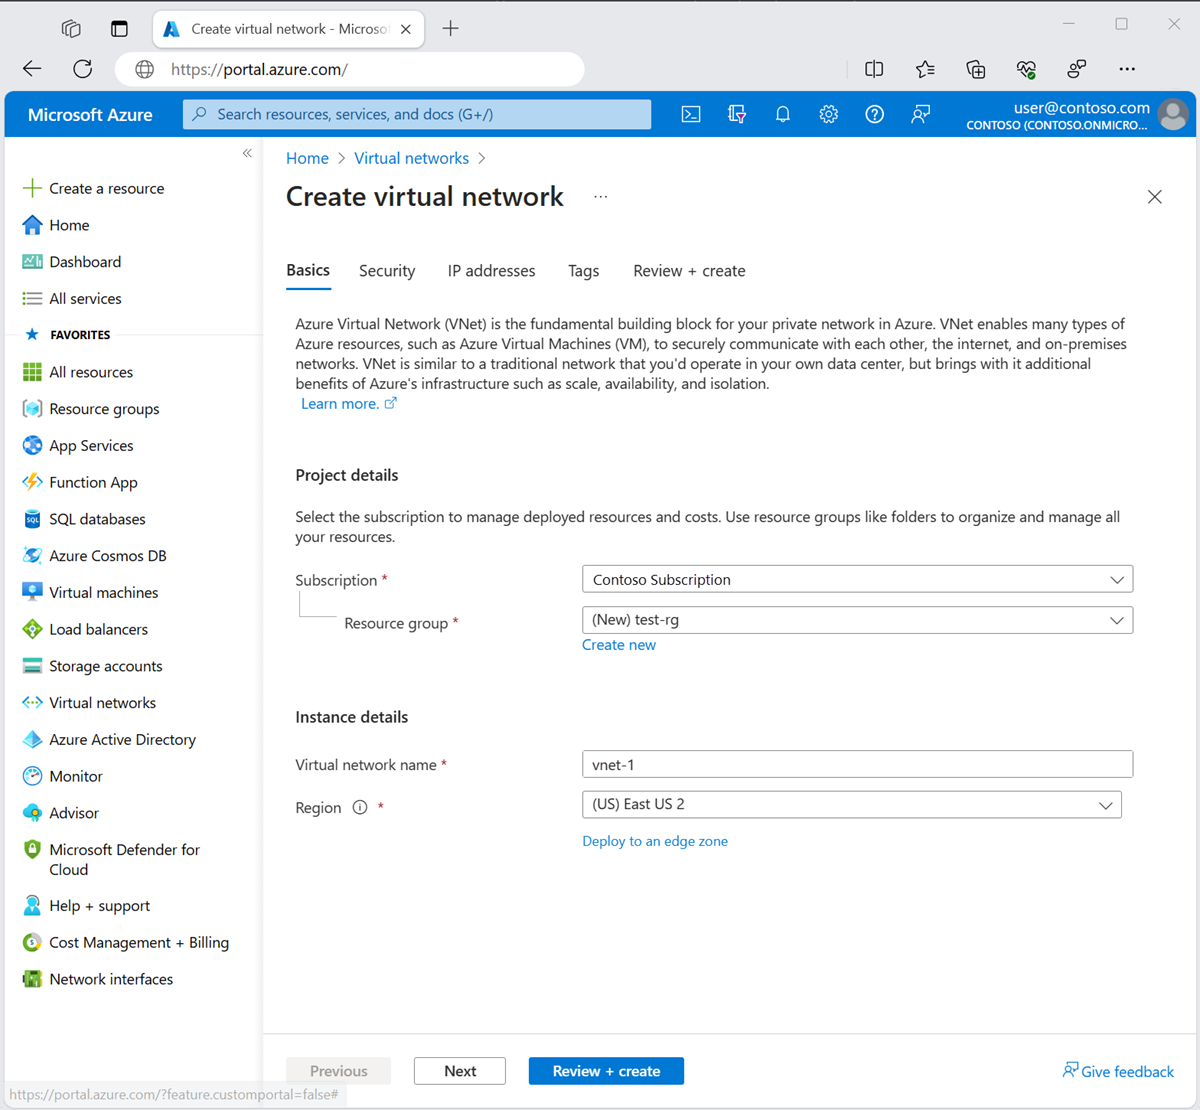 Screenshot of Basics tab of Create virtual network in the Azure portal.